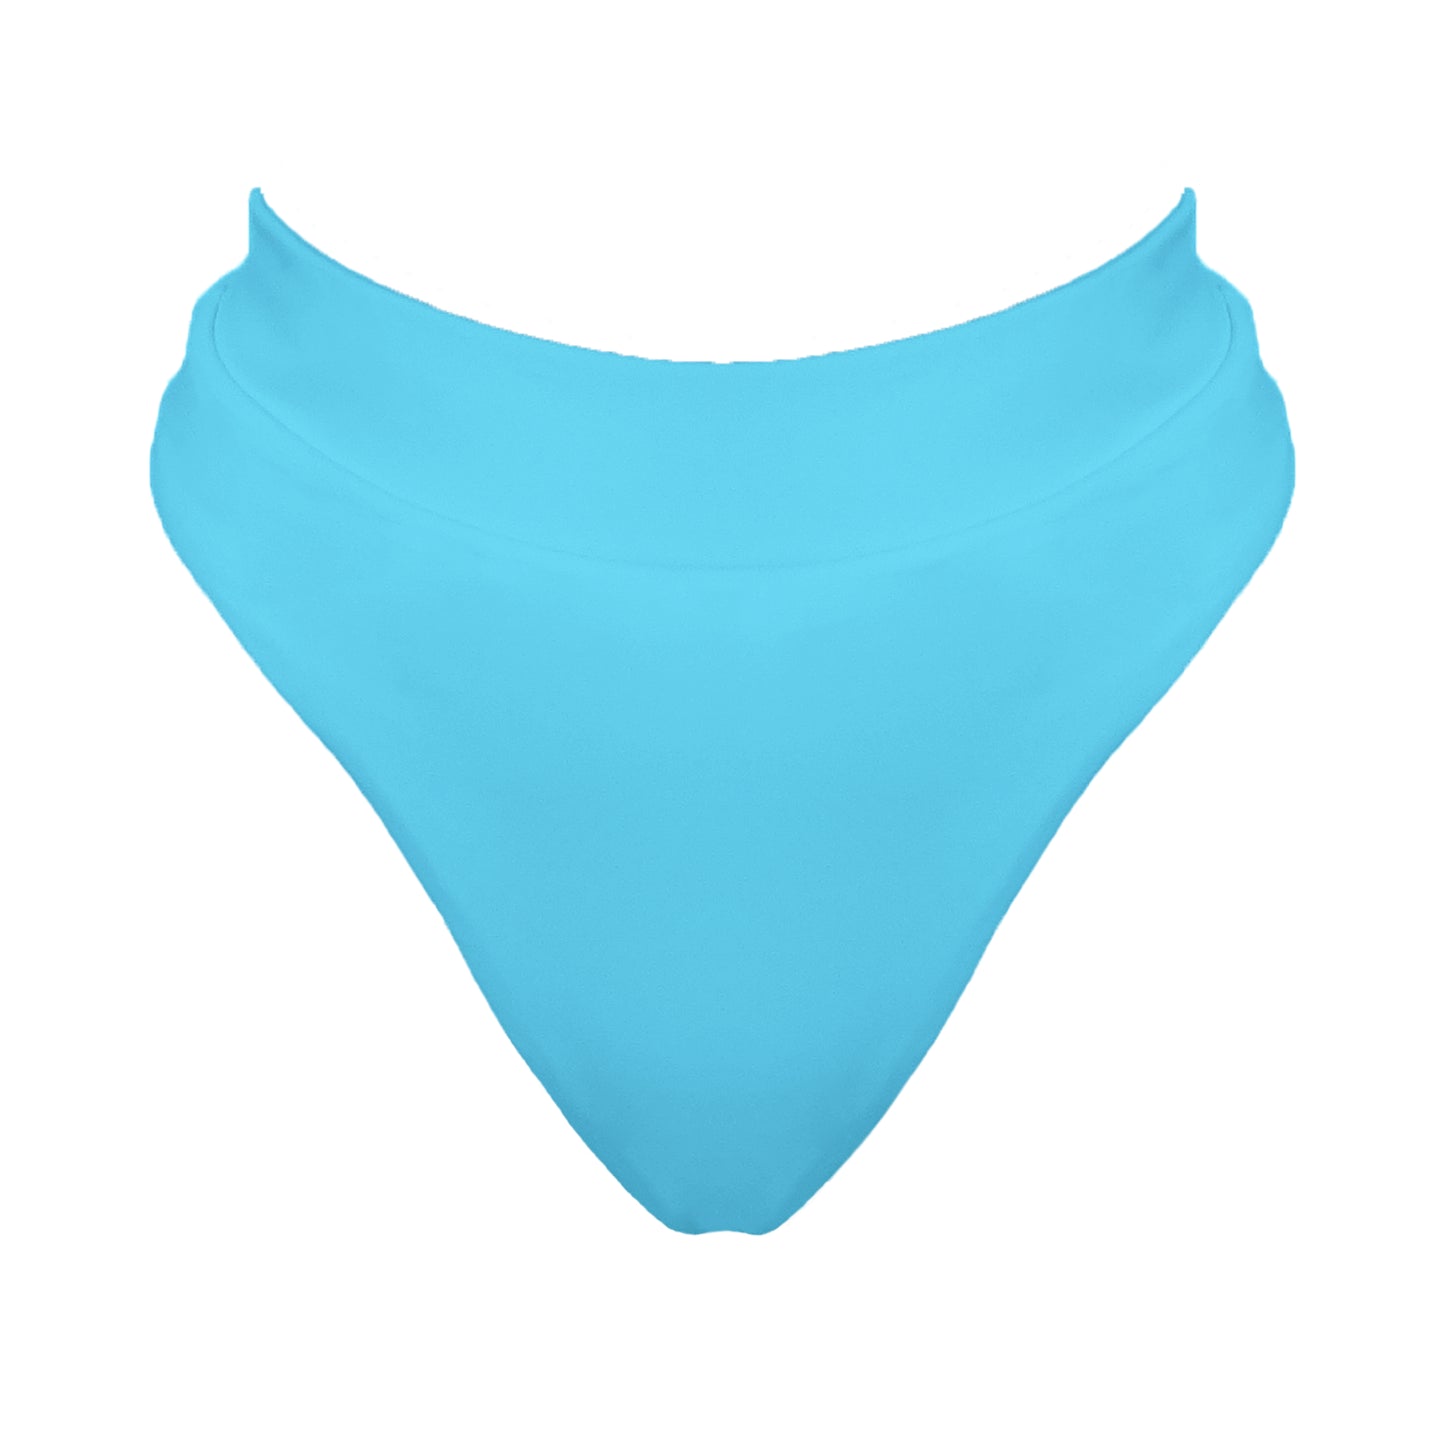 Acqua blue banded high waist full coverage bikini bottom.